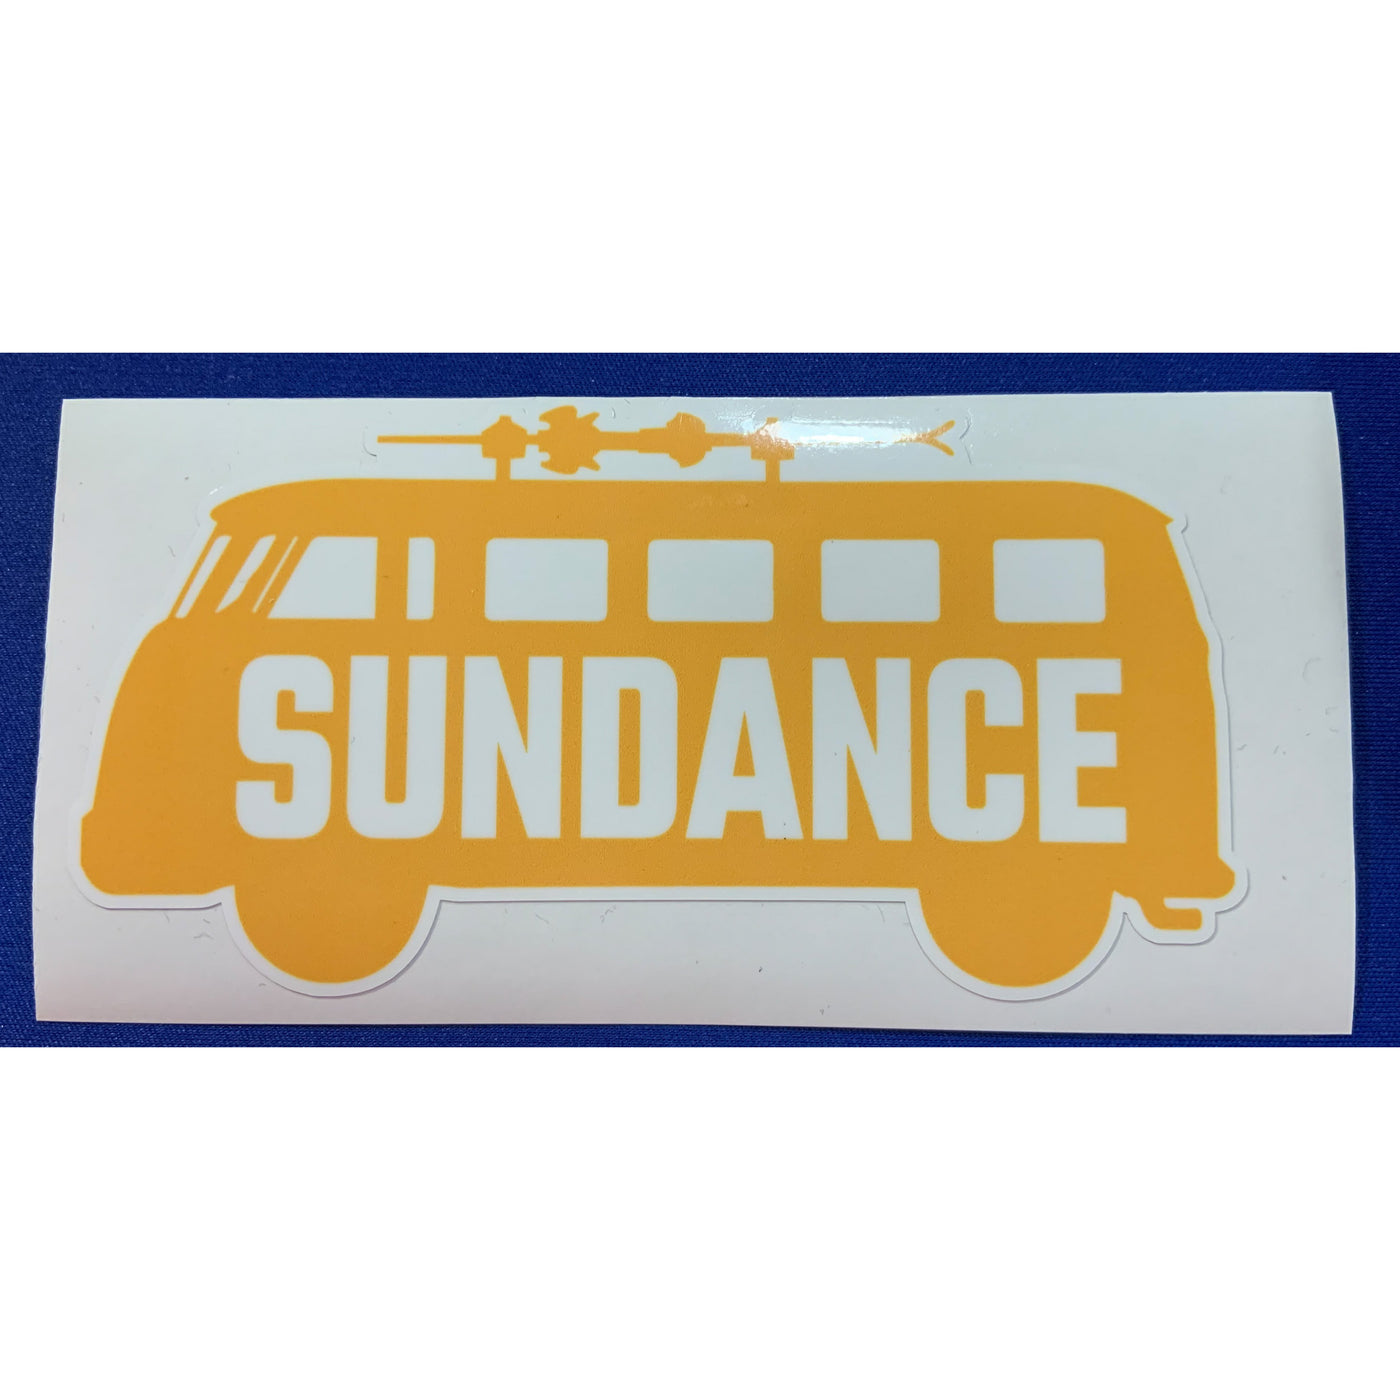 Sundance Stickers